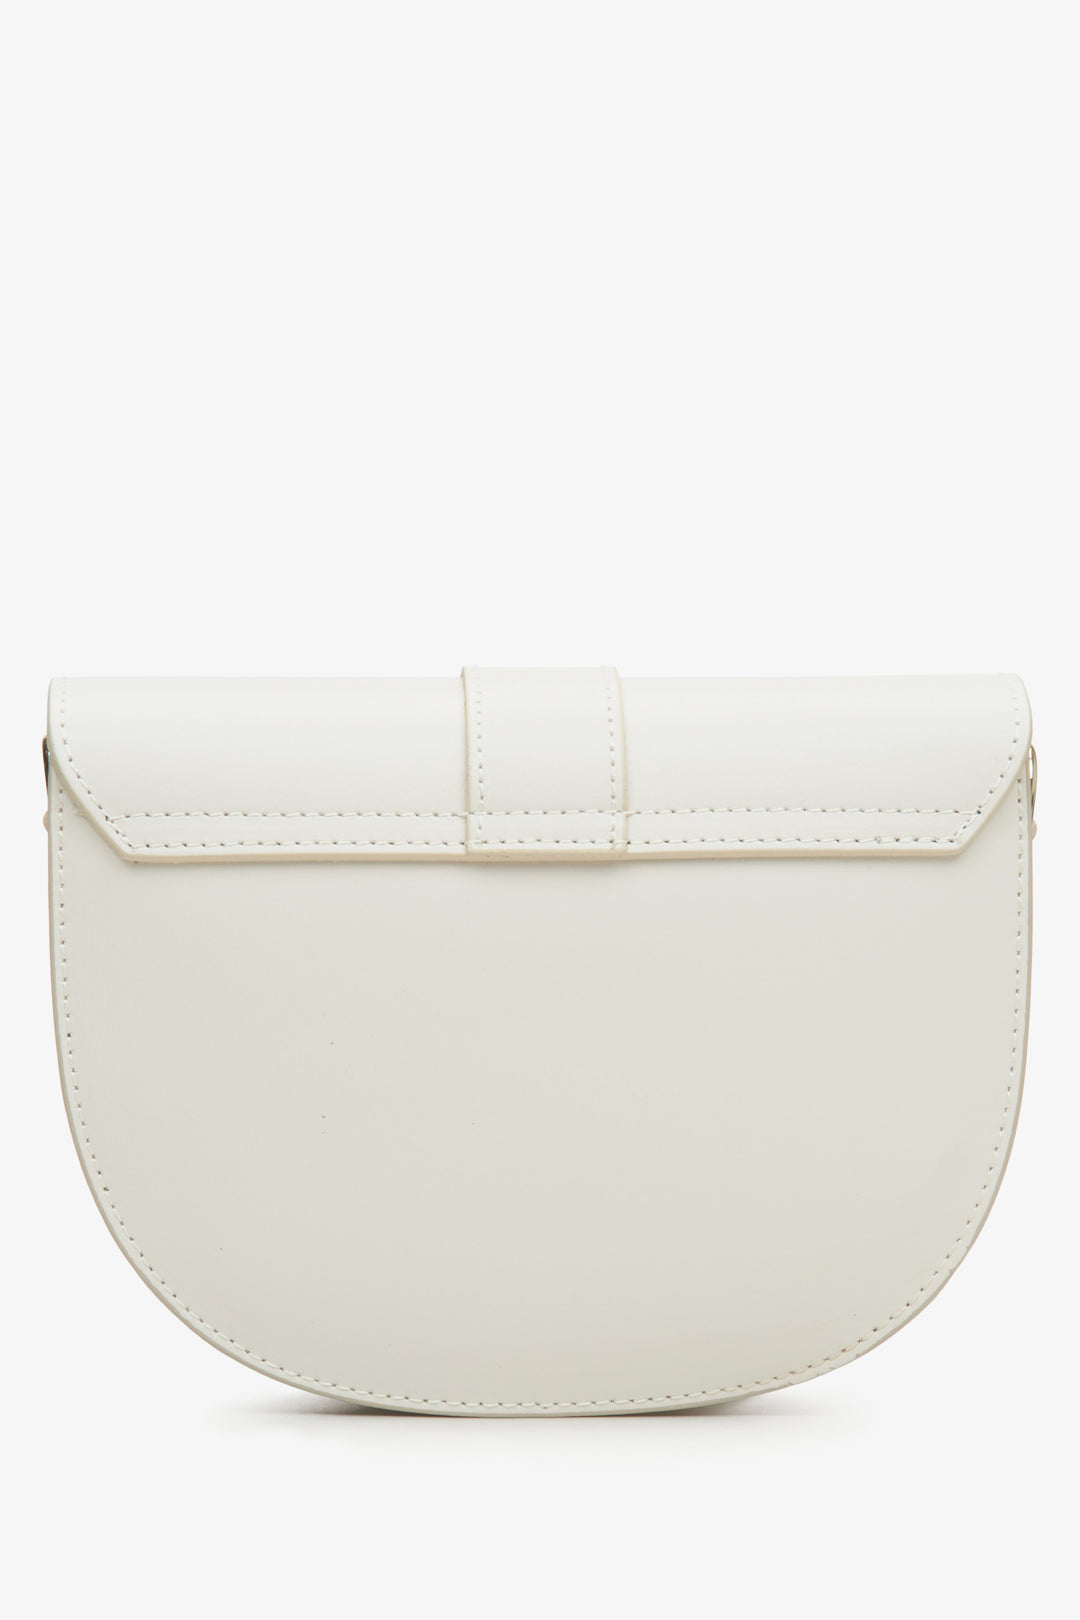 Estro women's cream beige crescent-shaped handbag made of genuine leather - back view presentation of the model.